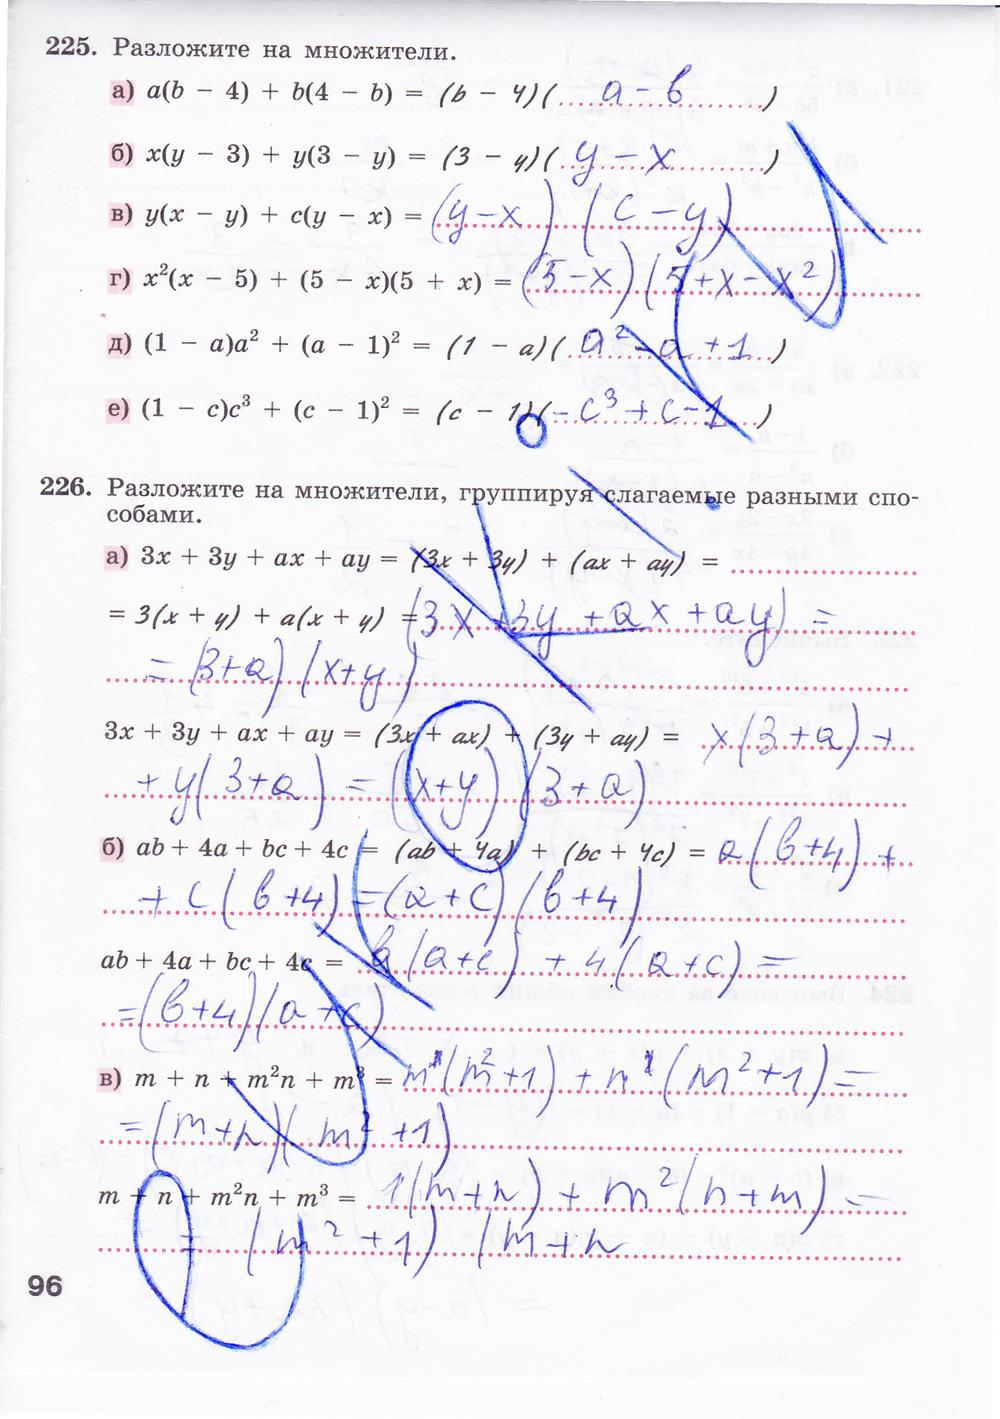 гдз 7 класс рабочая тетрадь страница 96 алгебра Минаева, Рослова